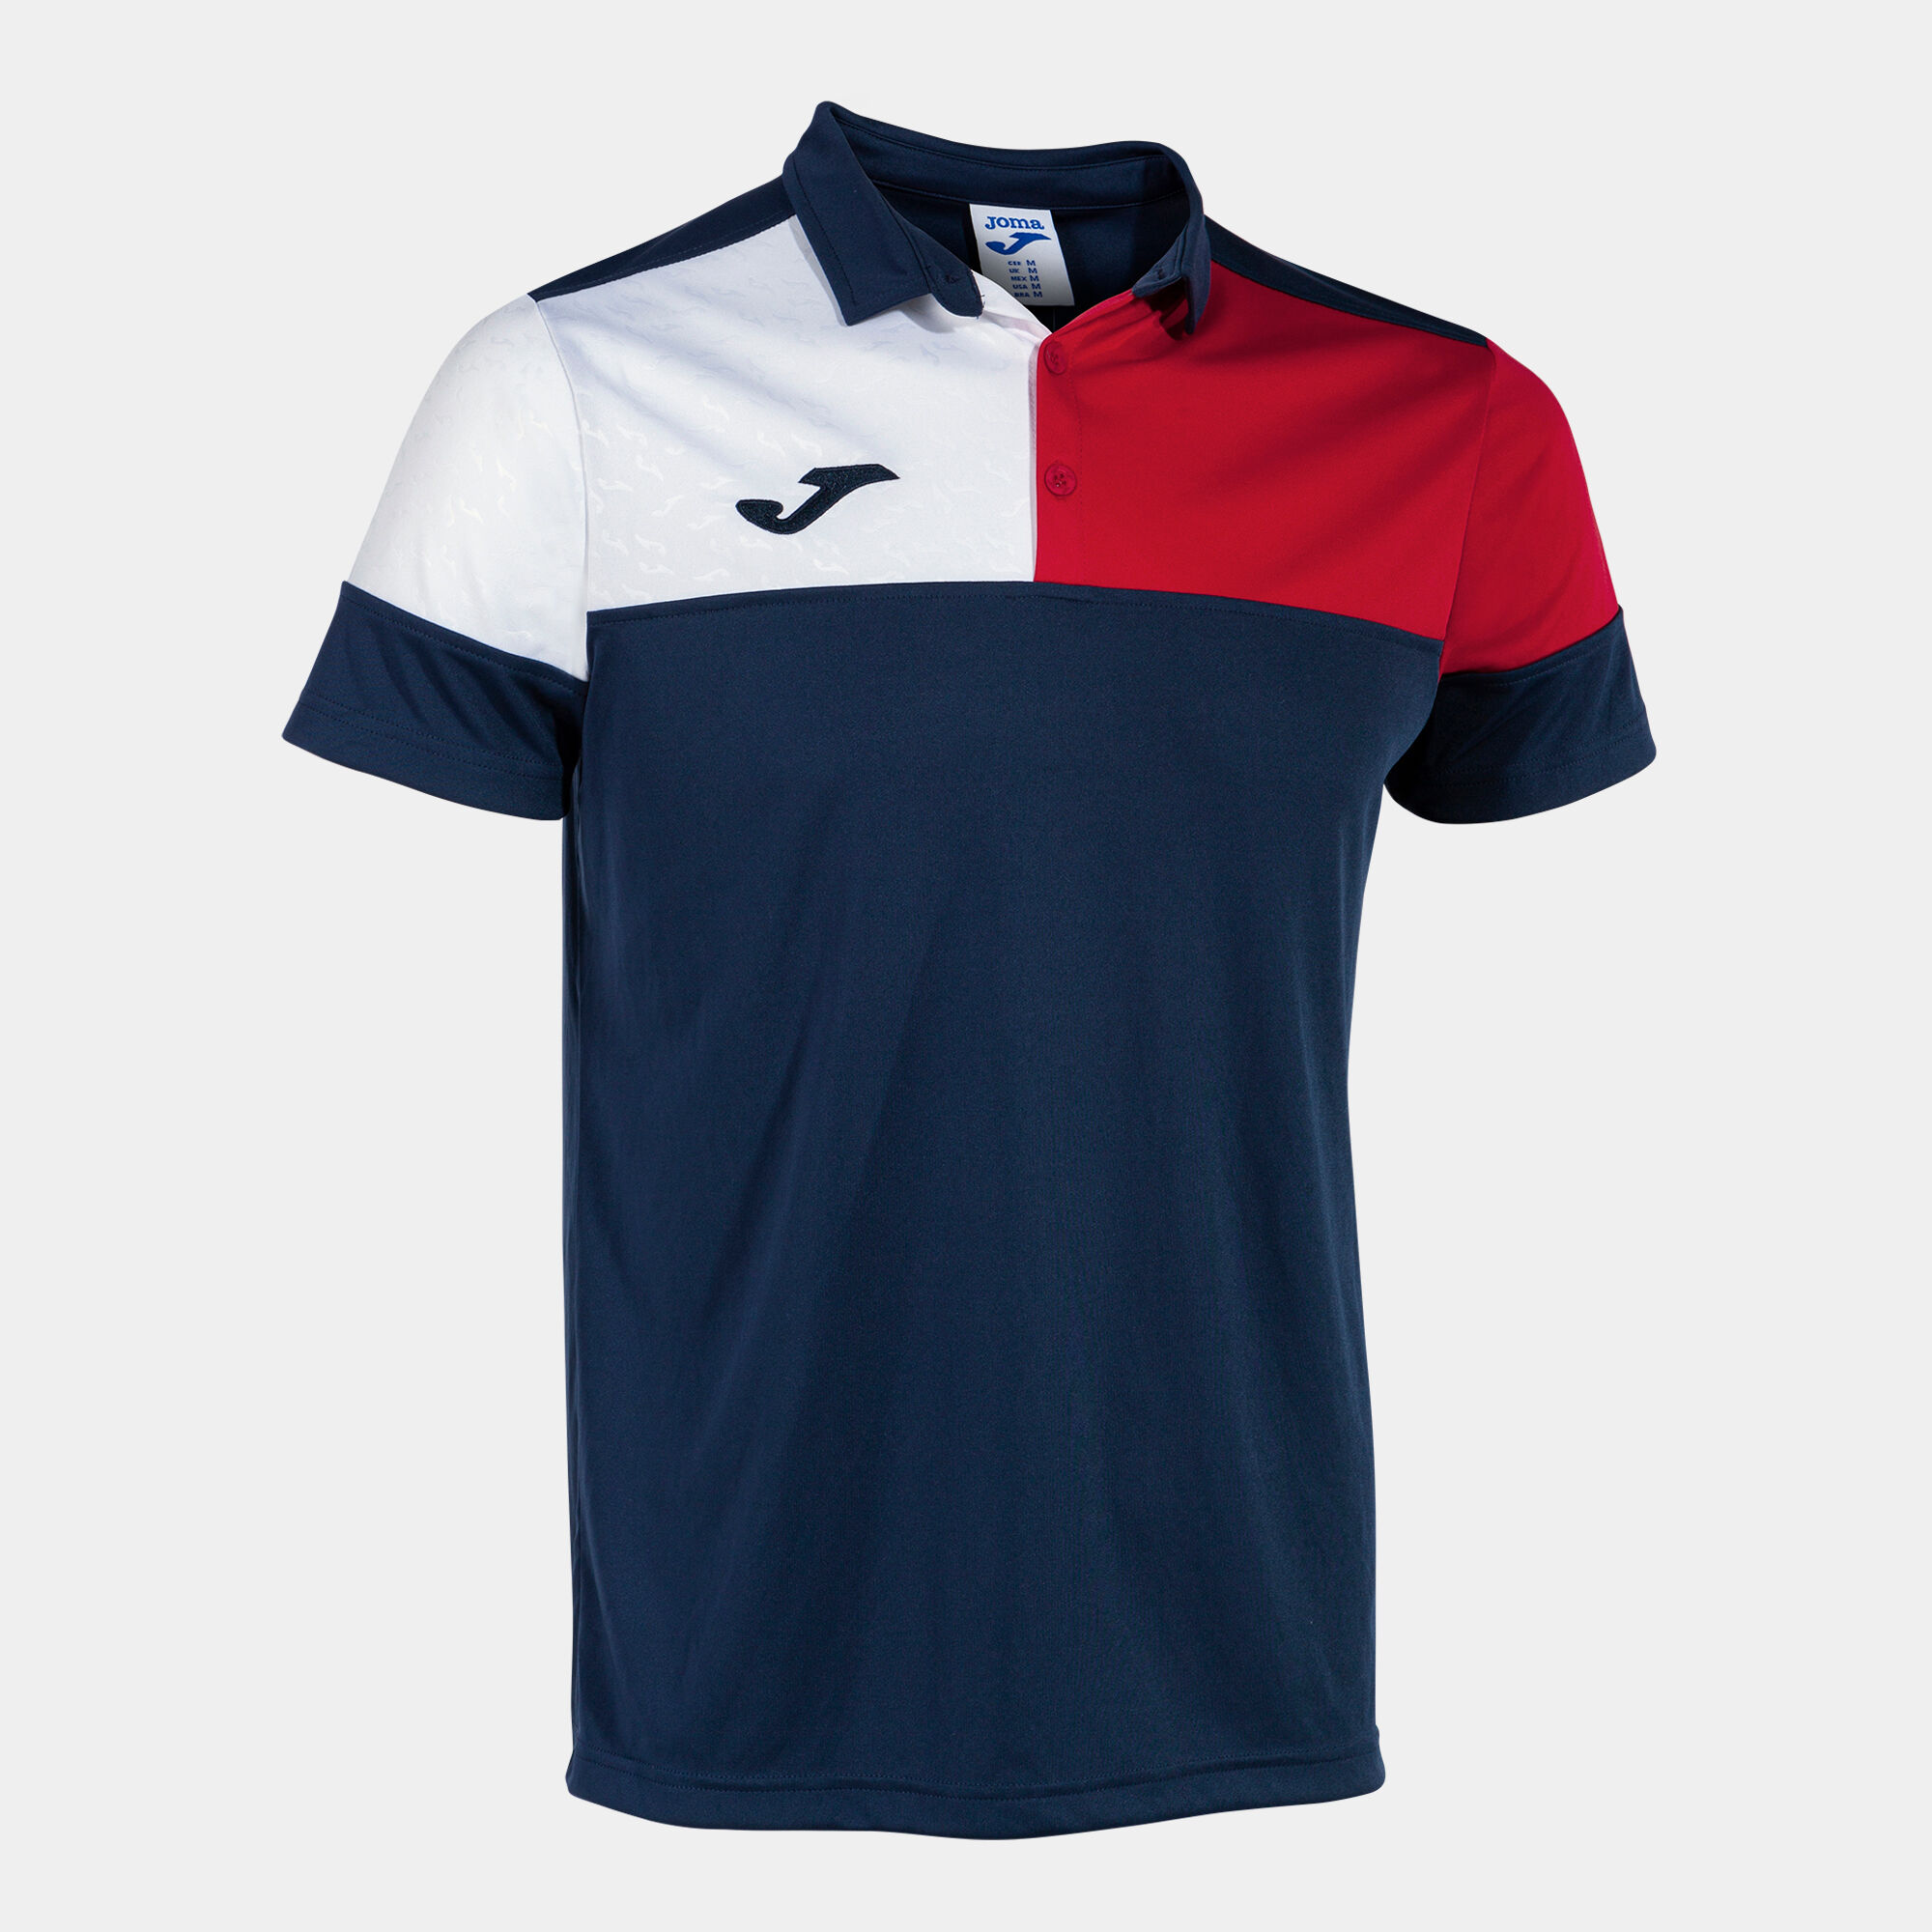 Polo shirt short-sleeve man Crew V navy blue red